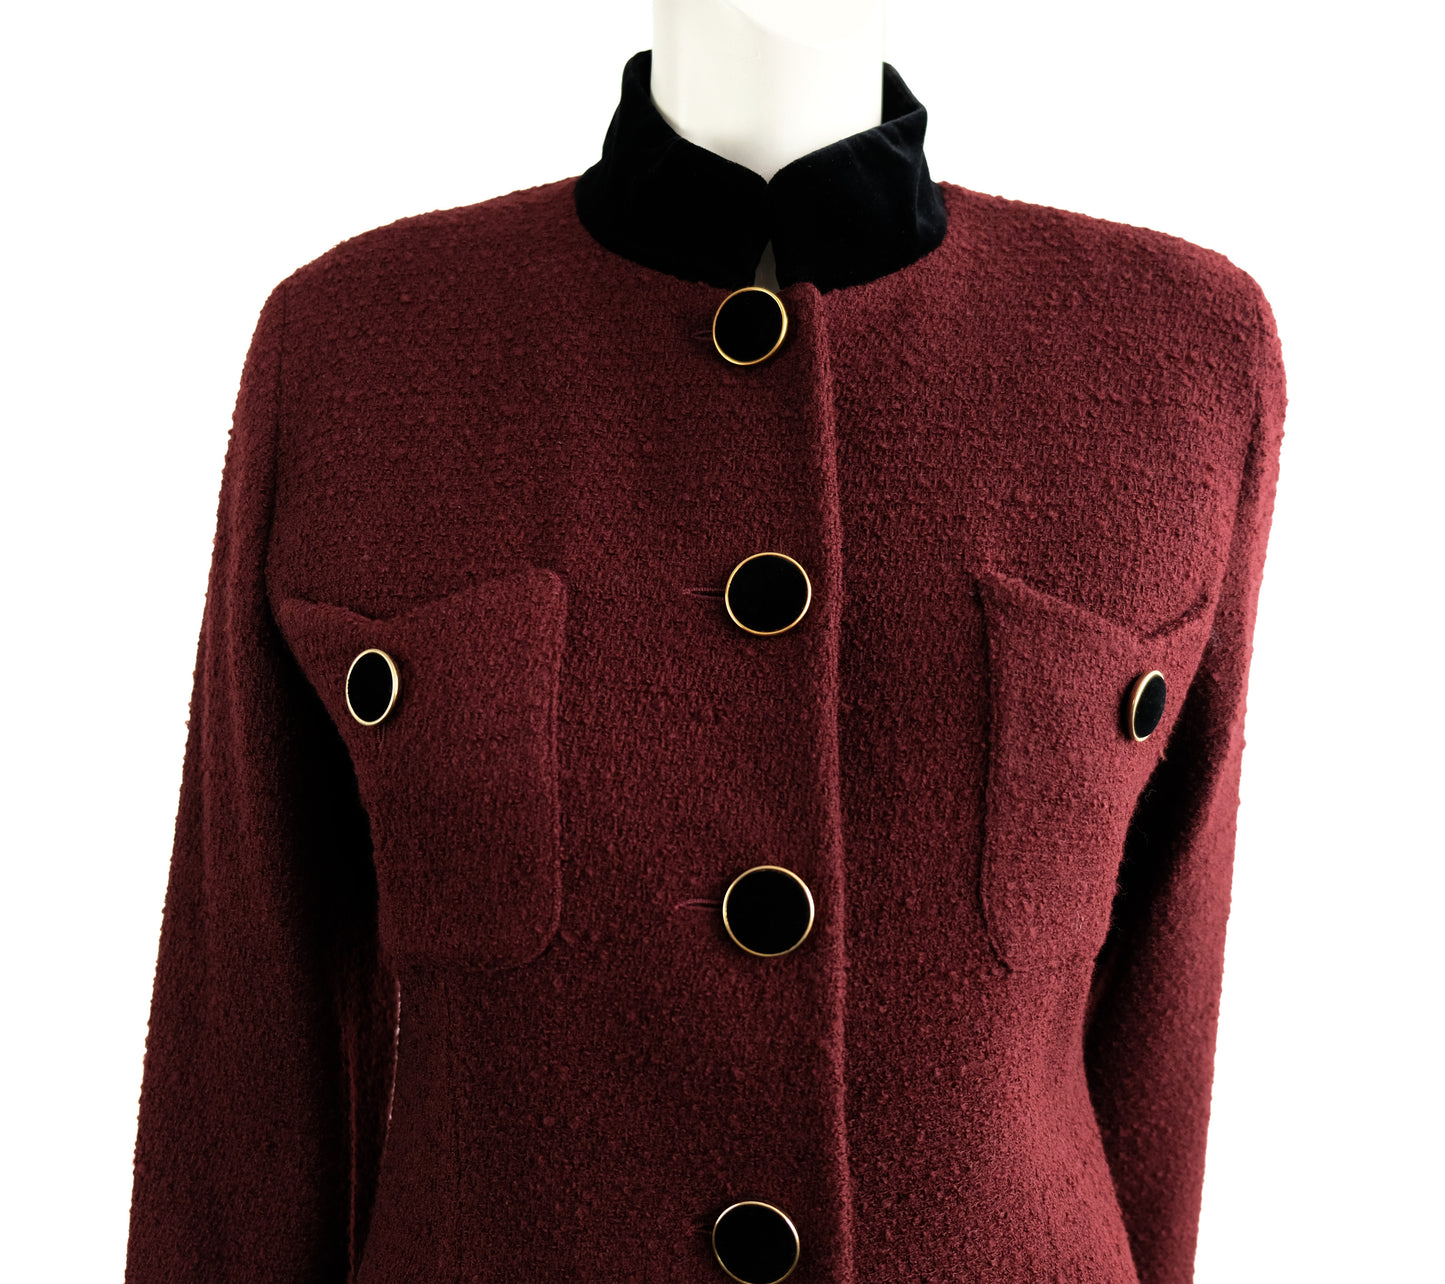 Karl Lagerfeld Vintage Skirt Suit in Burgundy Bouclé Wool with Velvet Trim, UK10-12